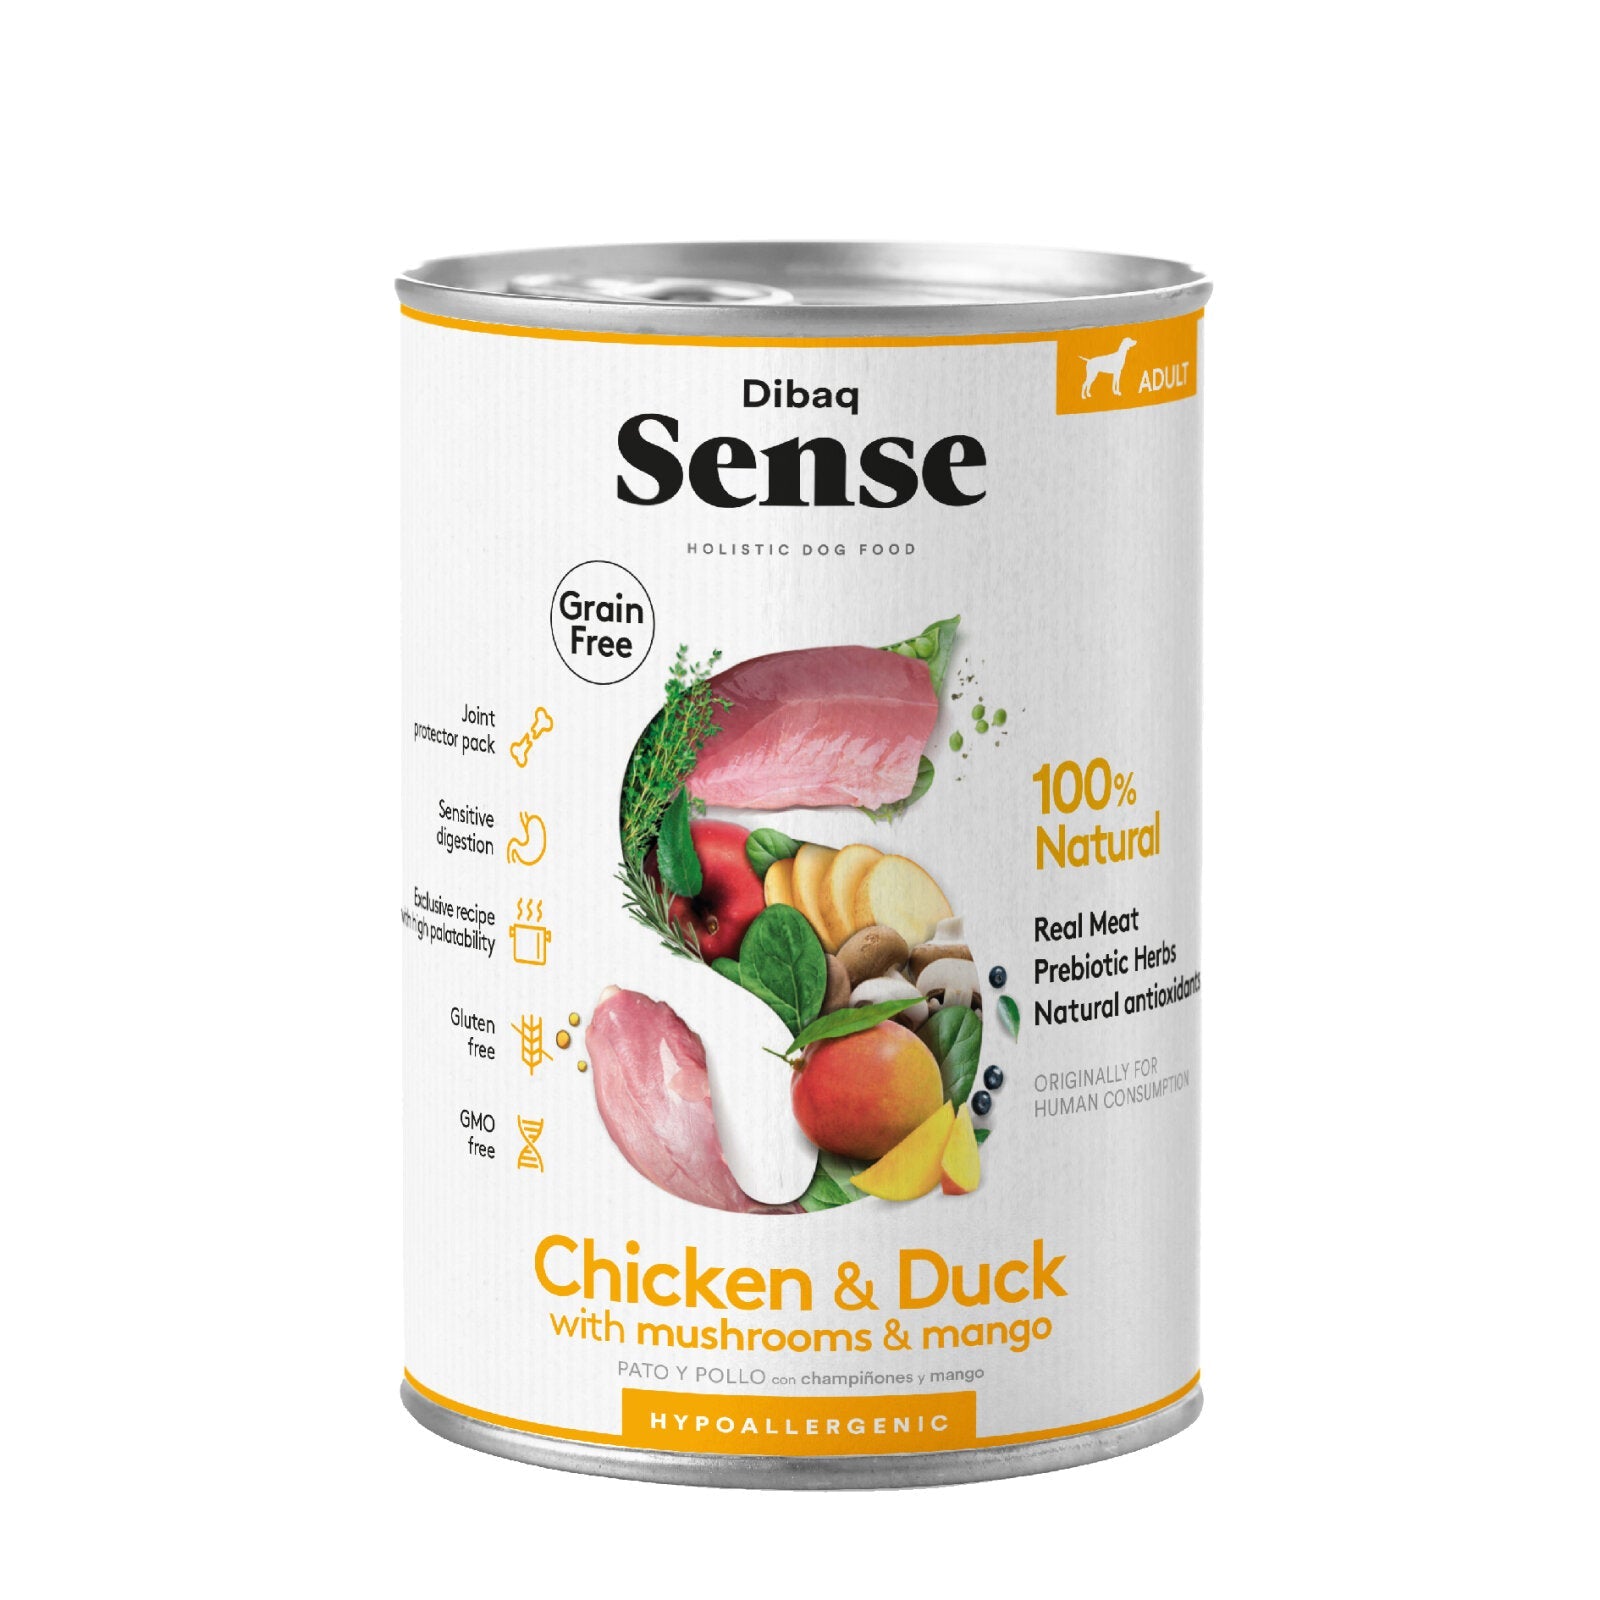 Dibaq Sense Chicken & Duck Tin - Petzzing